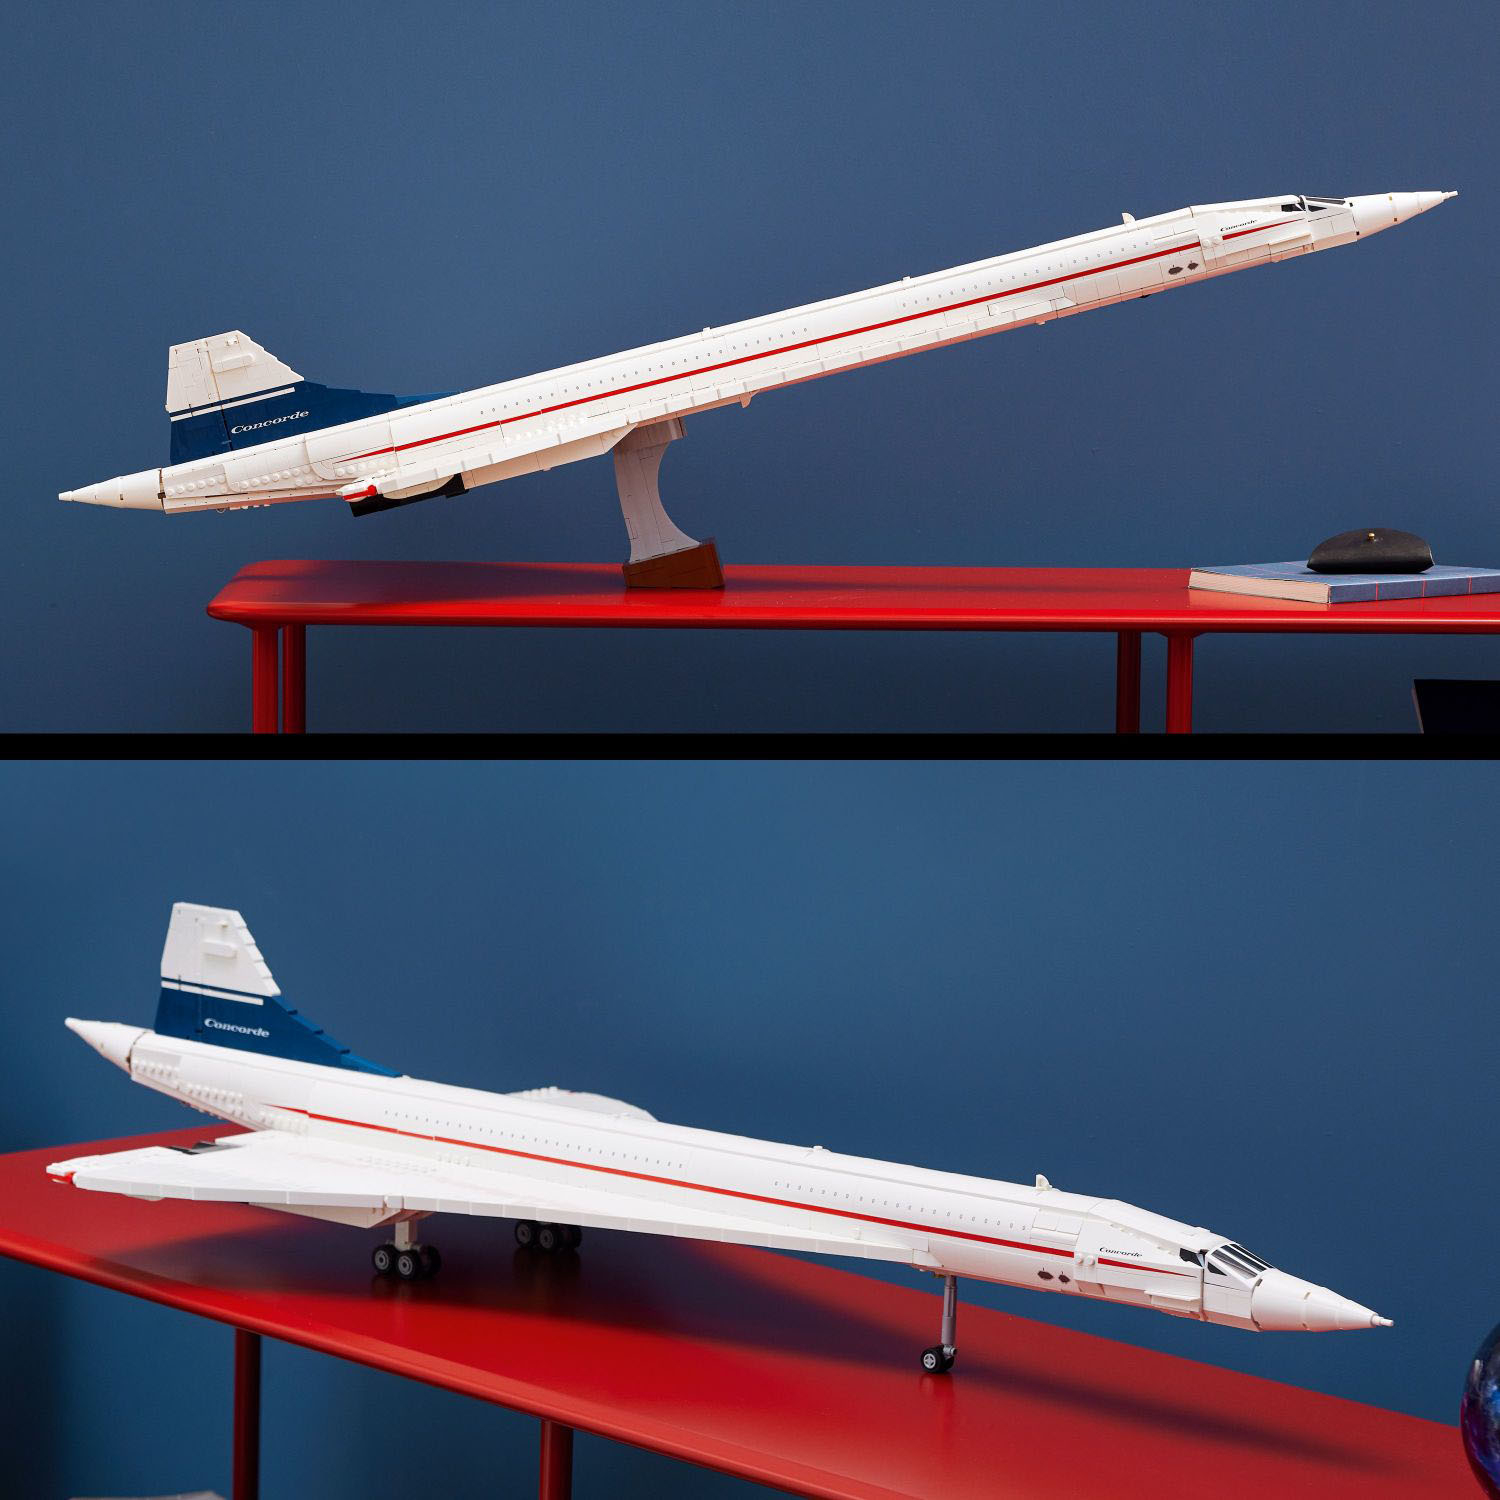 LEGO Icons Concorde Model Plane Building Set 10318 6426508 - Best Buy